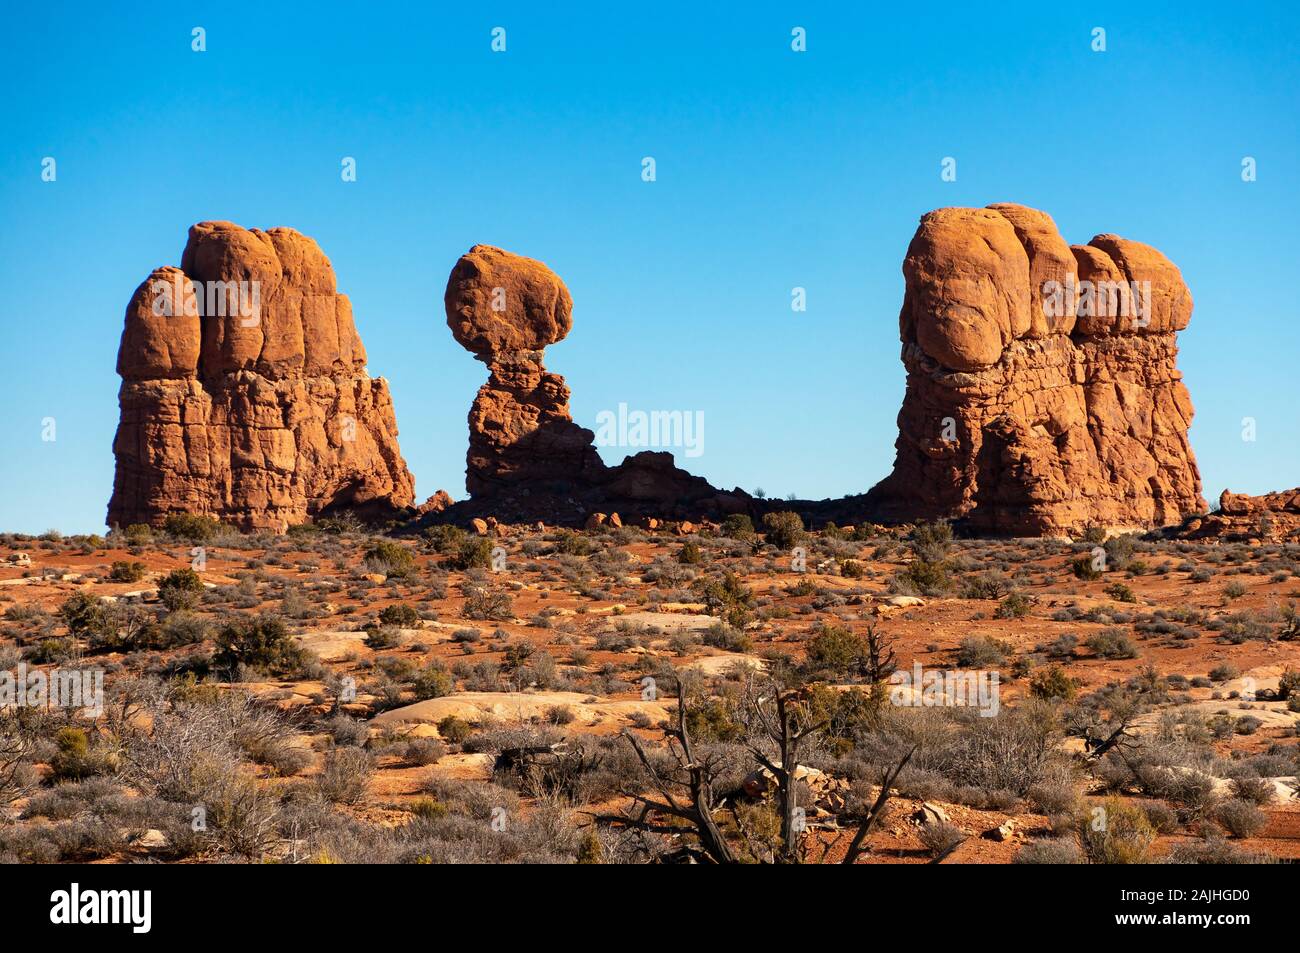 The Balanced Rock, famous orange rock formation near Arches National Park, Utah, USA. Stock Photo